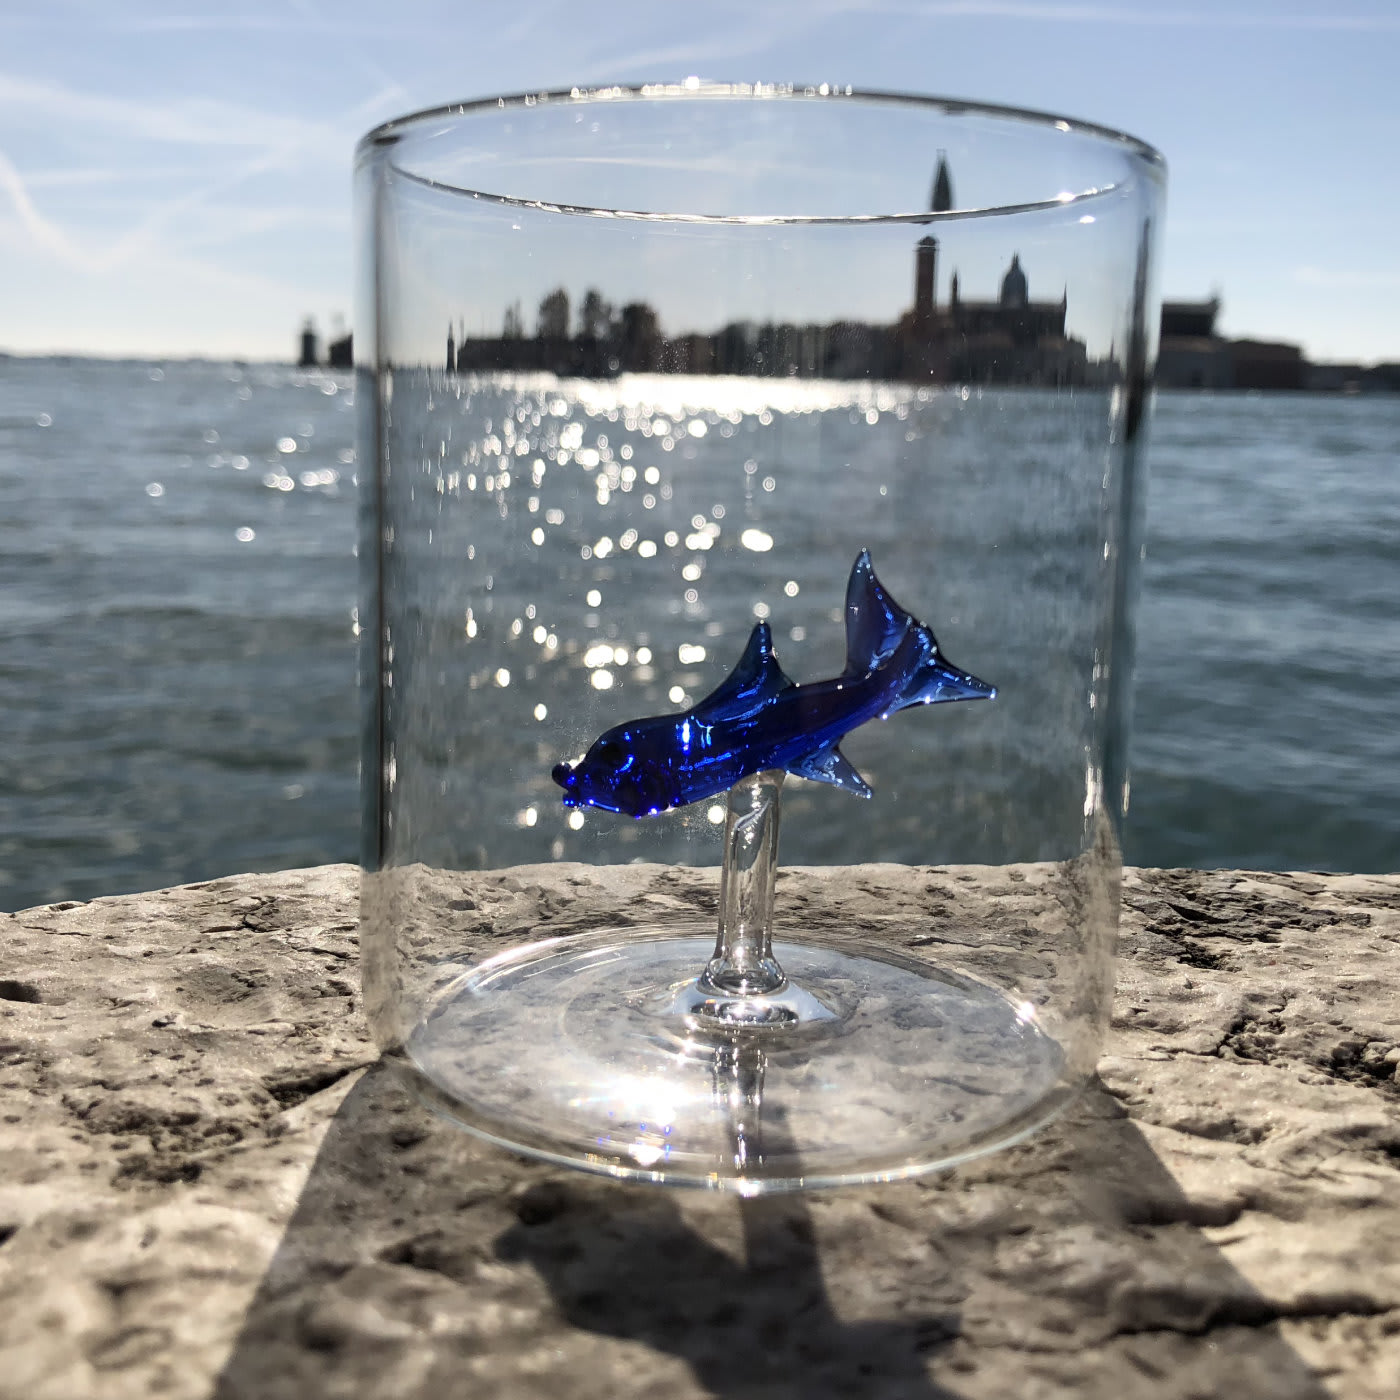 Set of Four Little Blue Fish Glasses